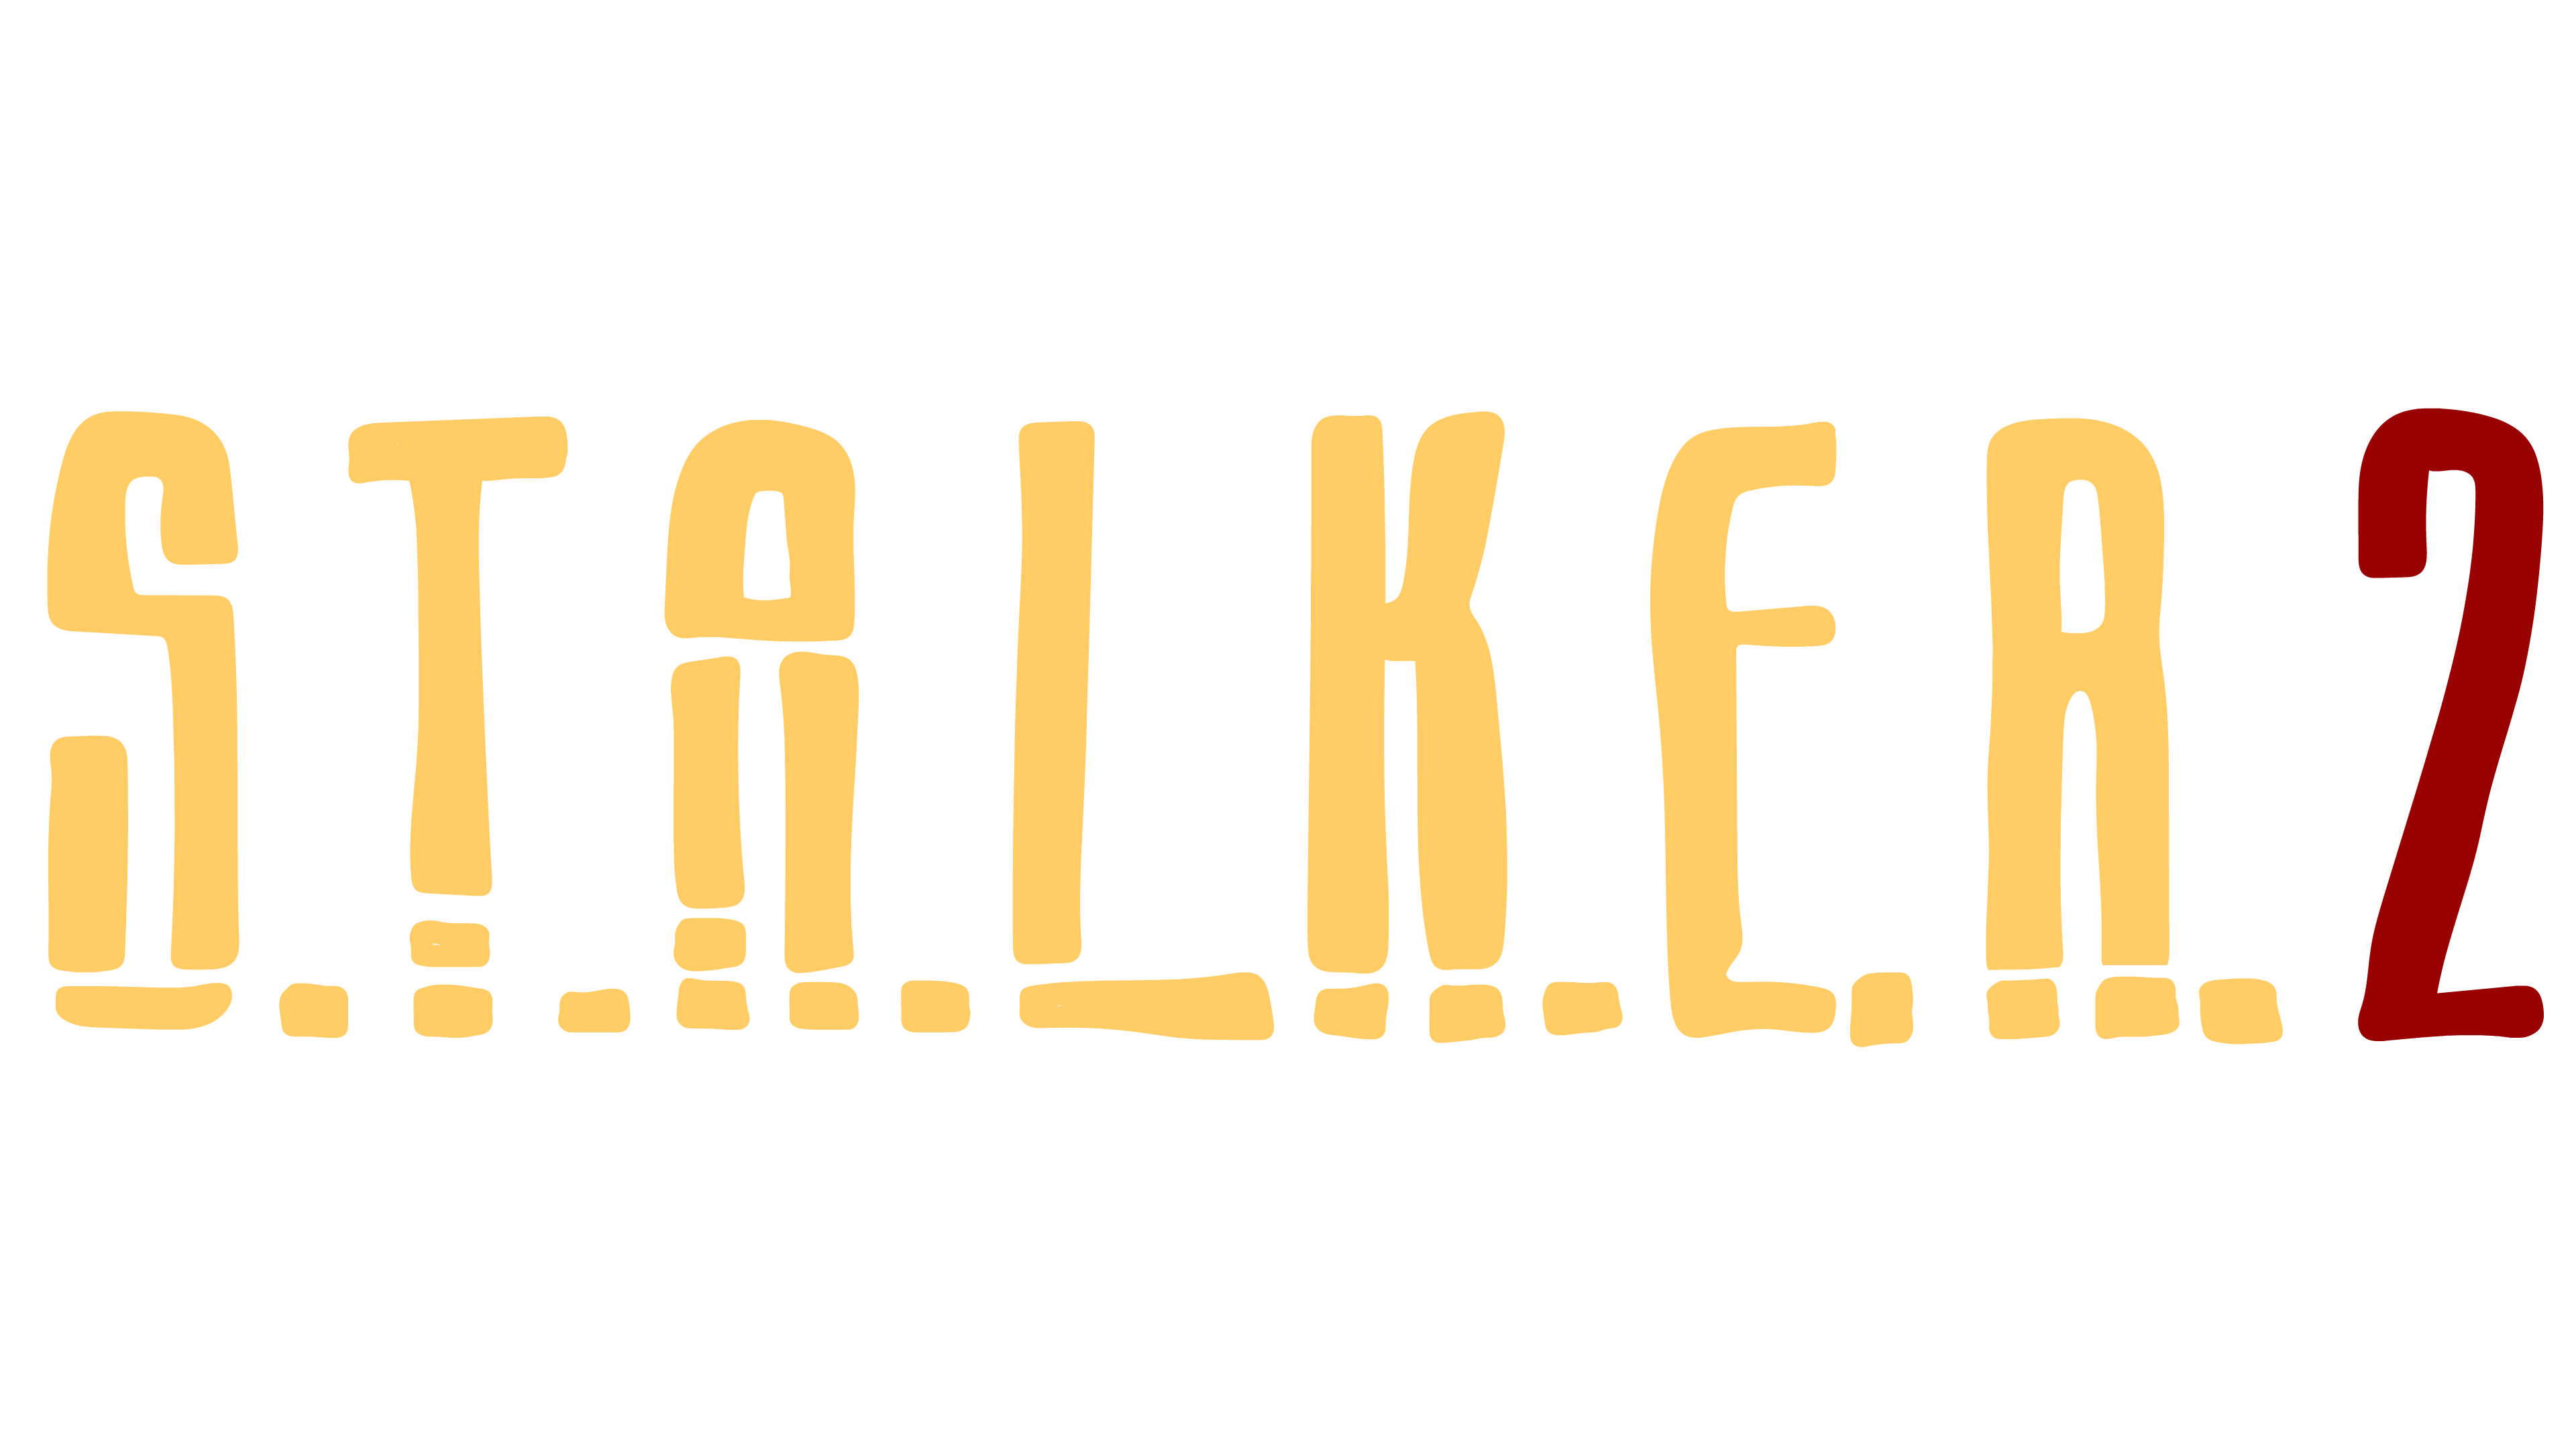 STALKER 2 logo yellow